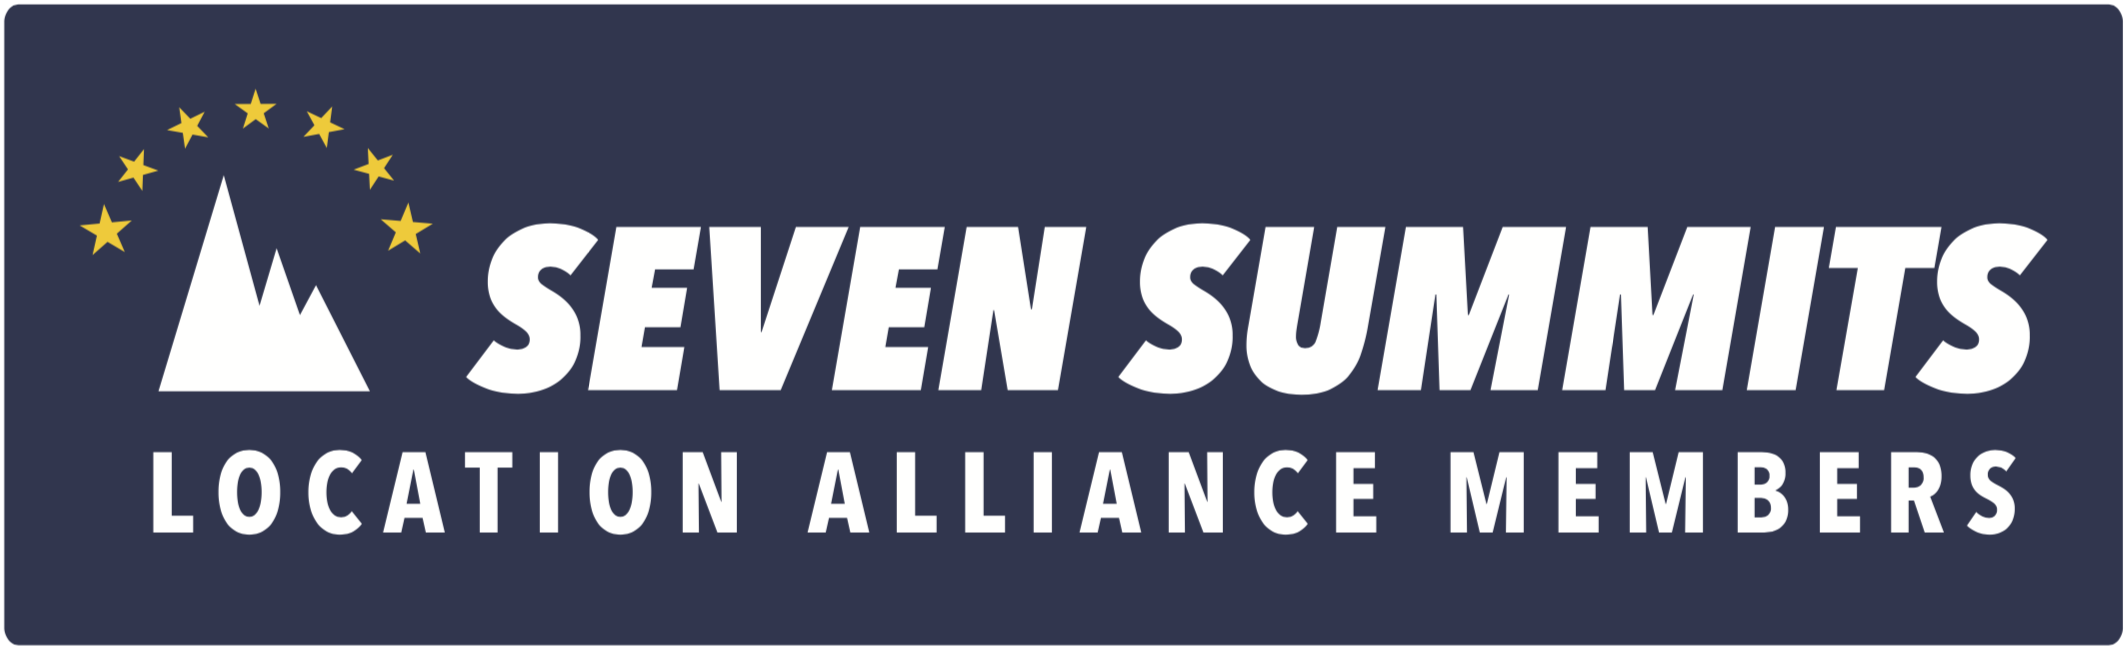 SEVEN SUMMITS location alliance members